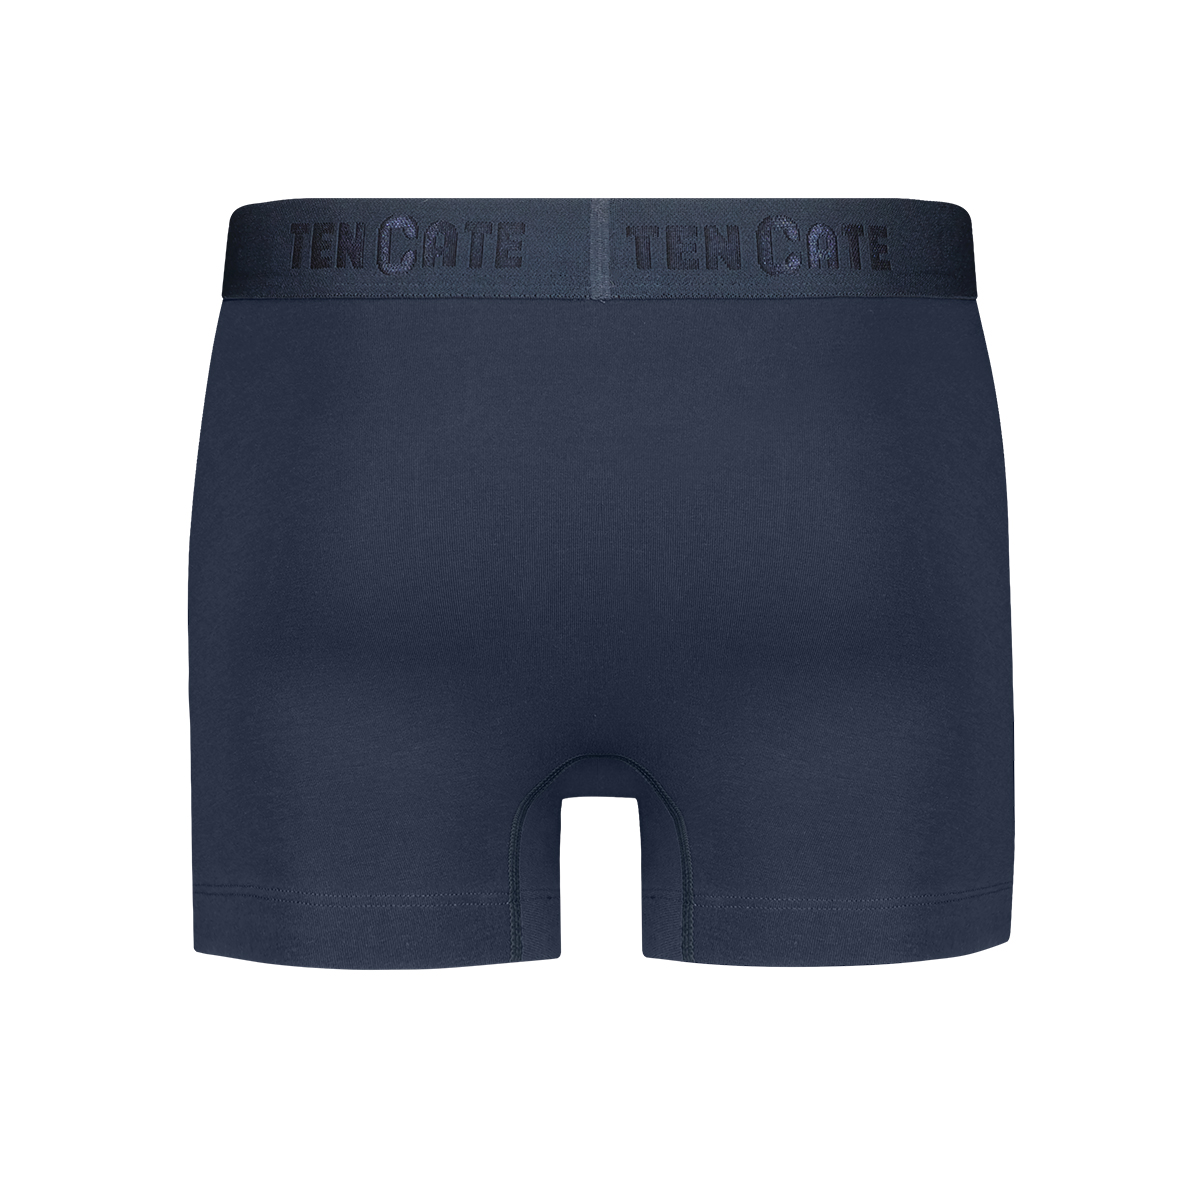 shorts check blue 2 pack